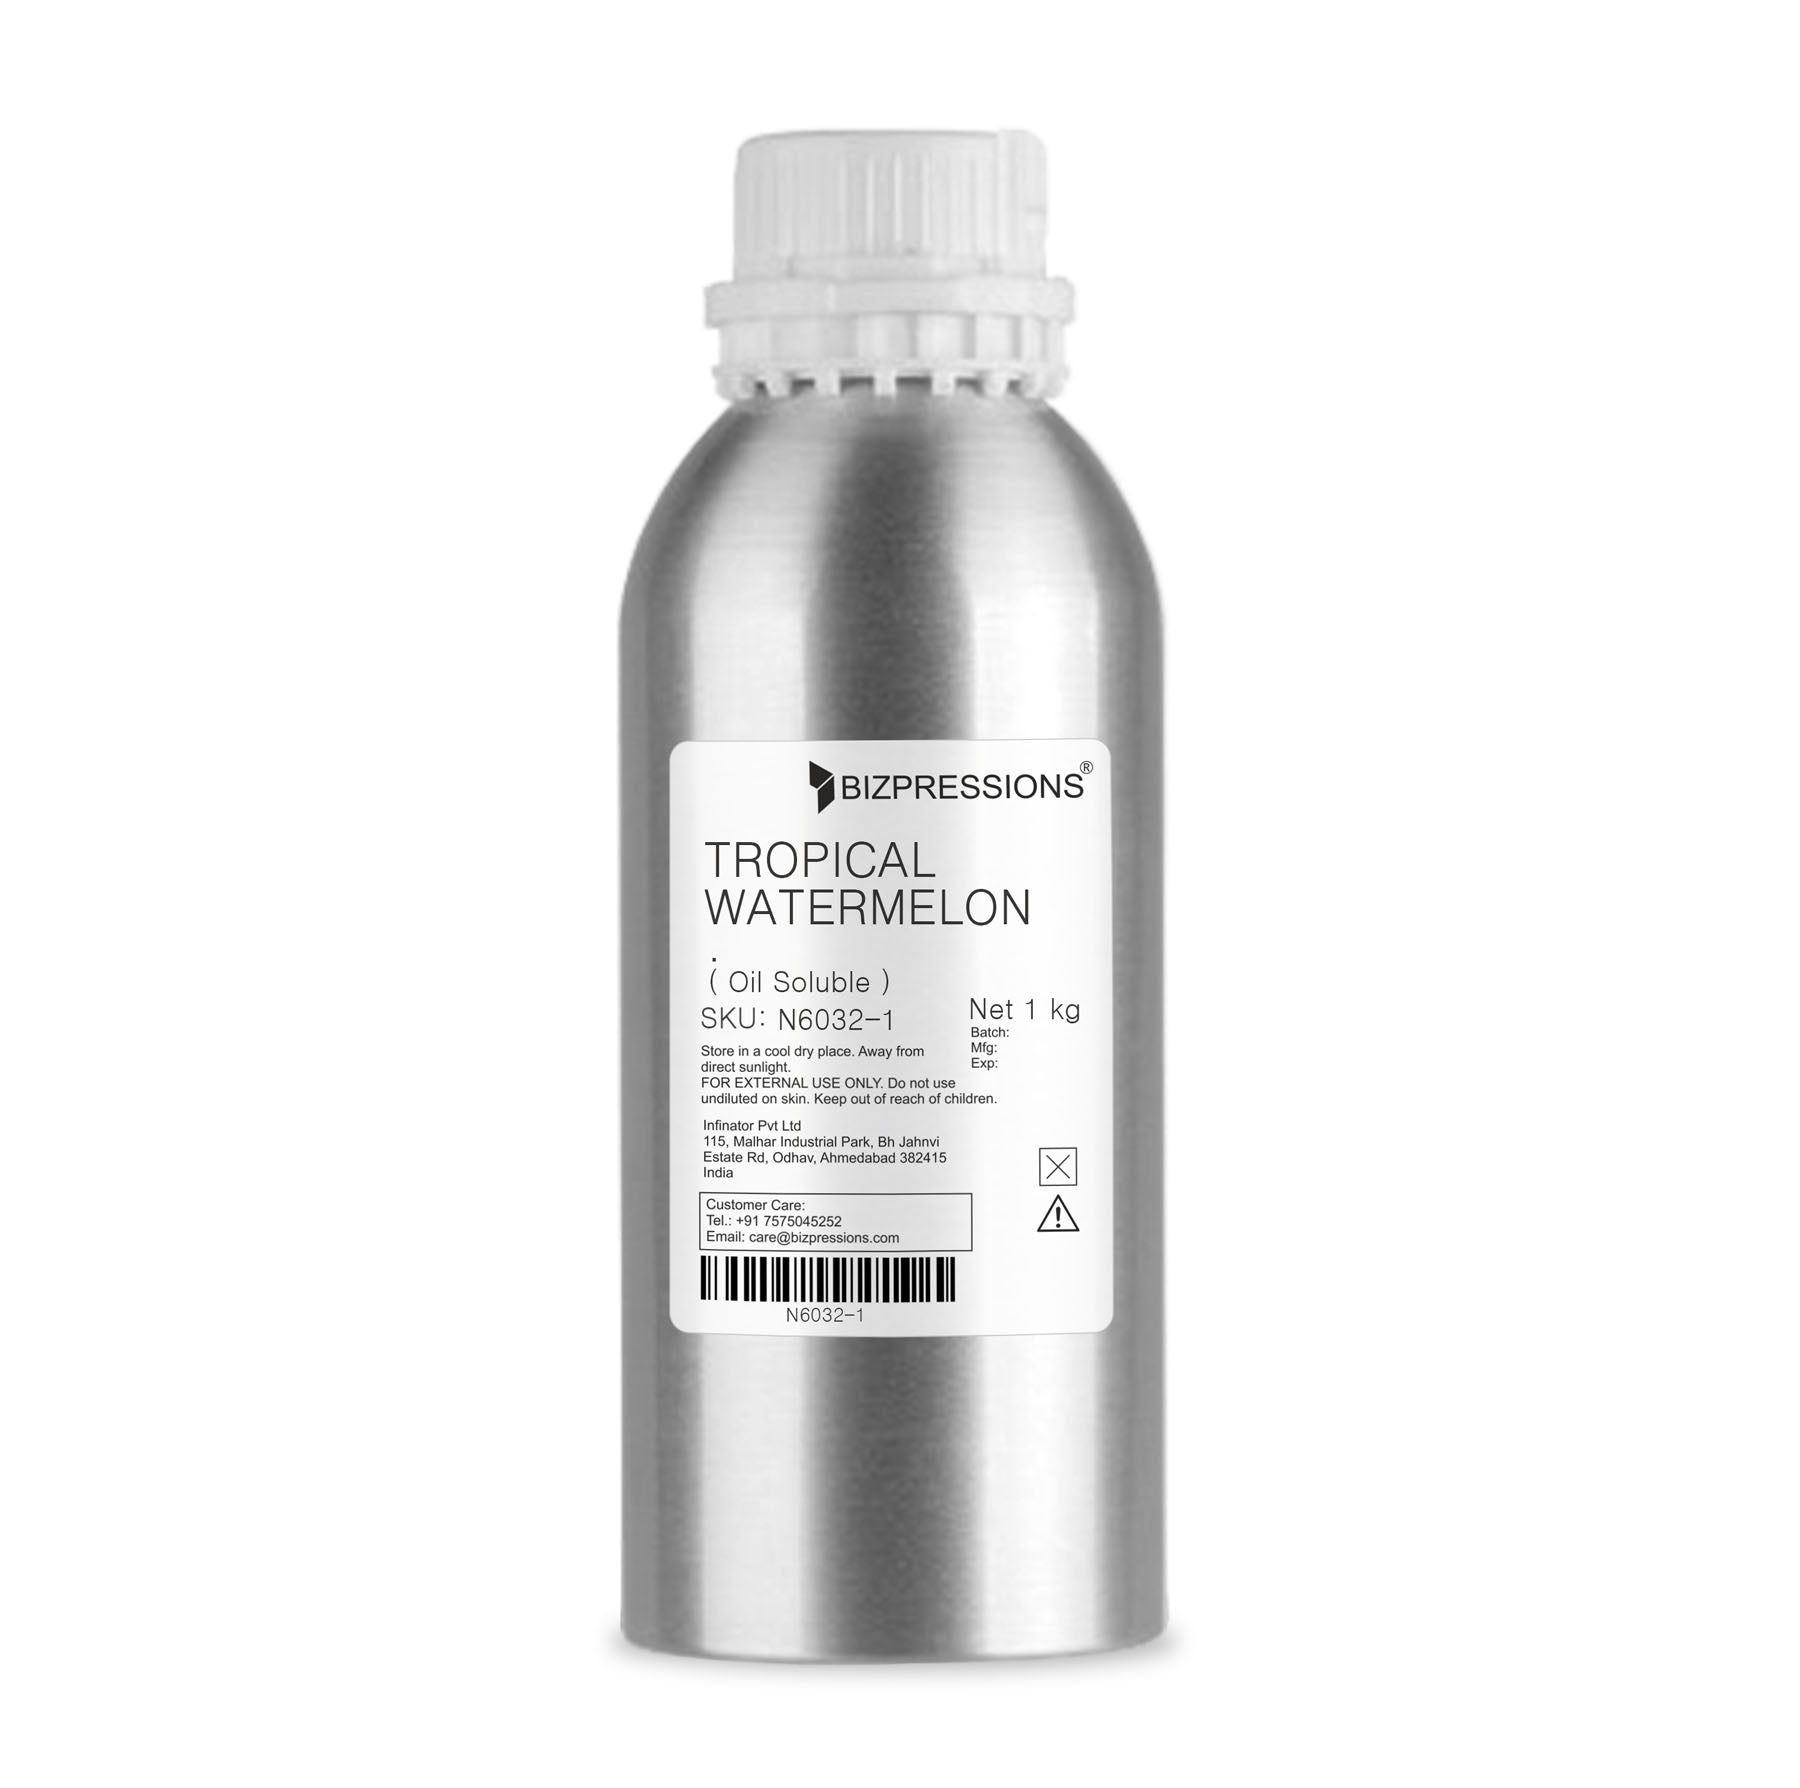 TROPICAL WATERMELON - Fragrance ( Oil Soluble ) - 1 kg